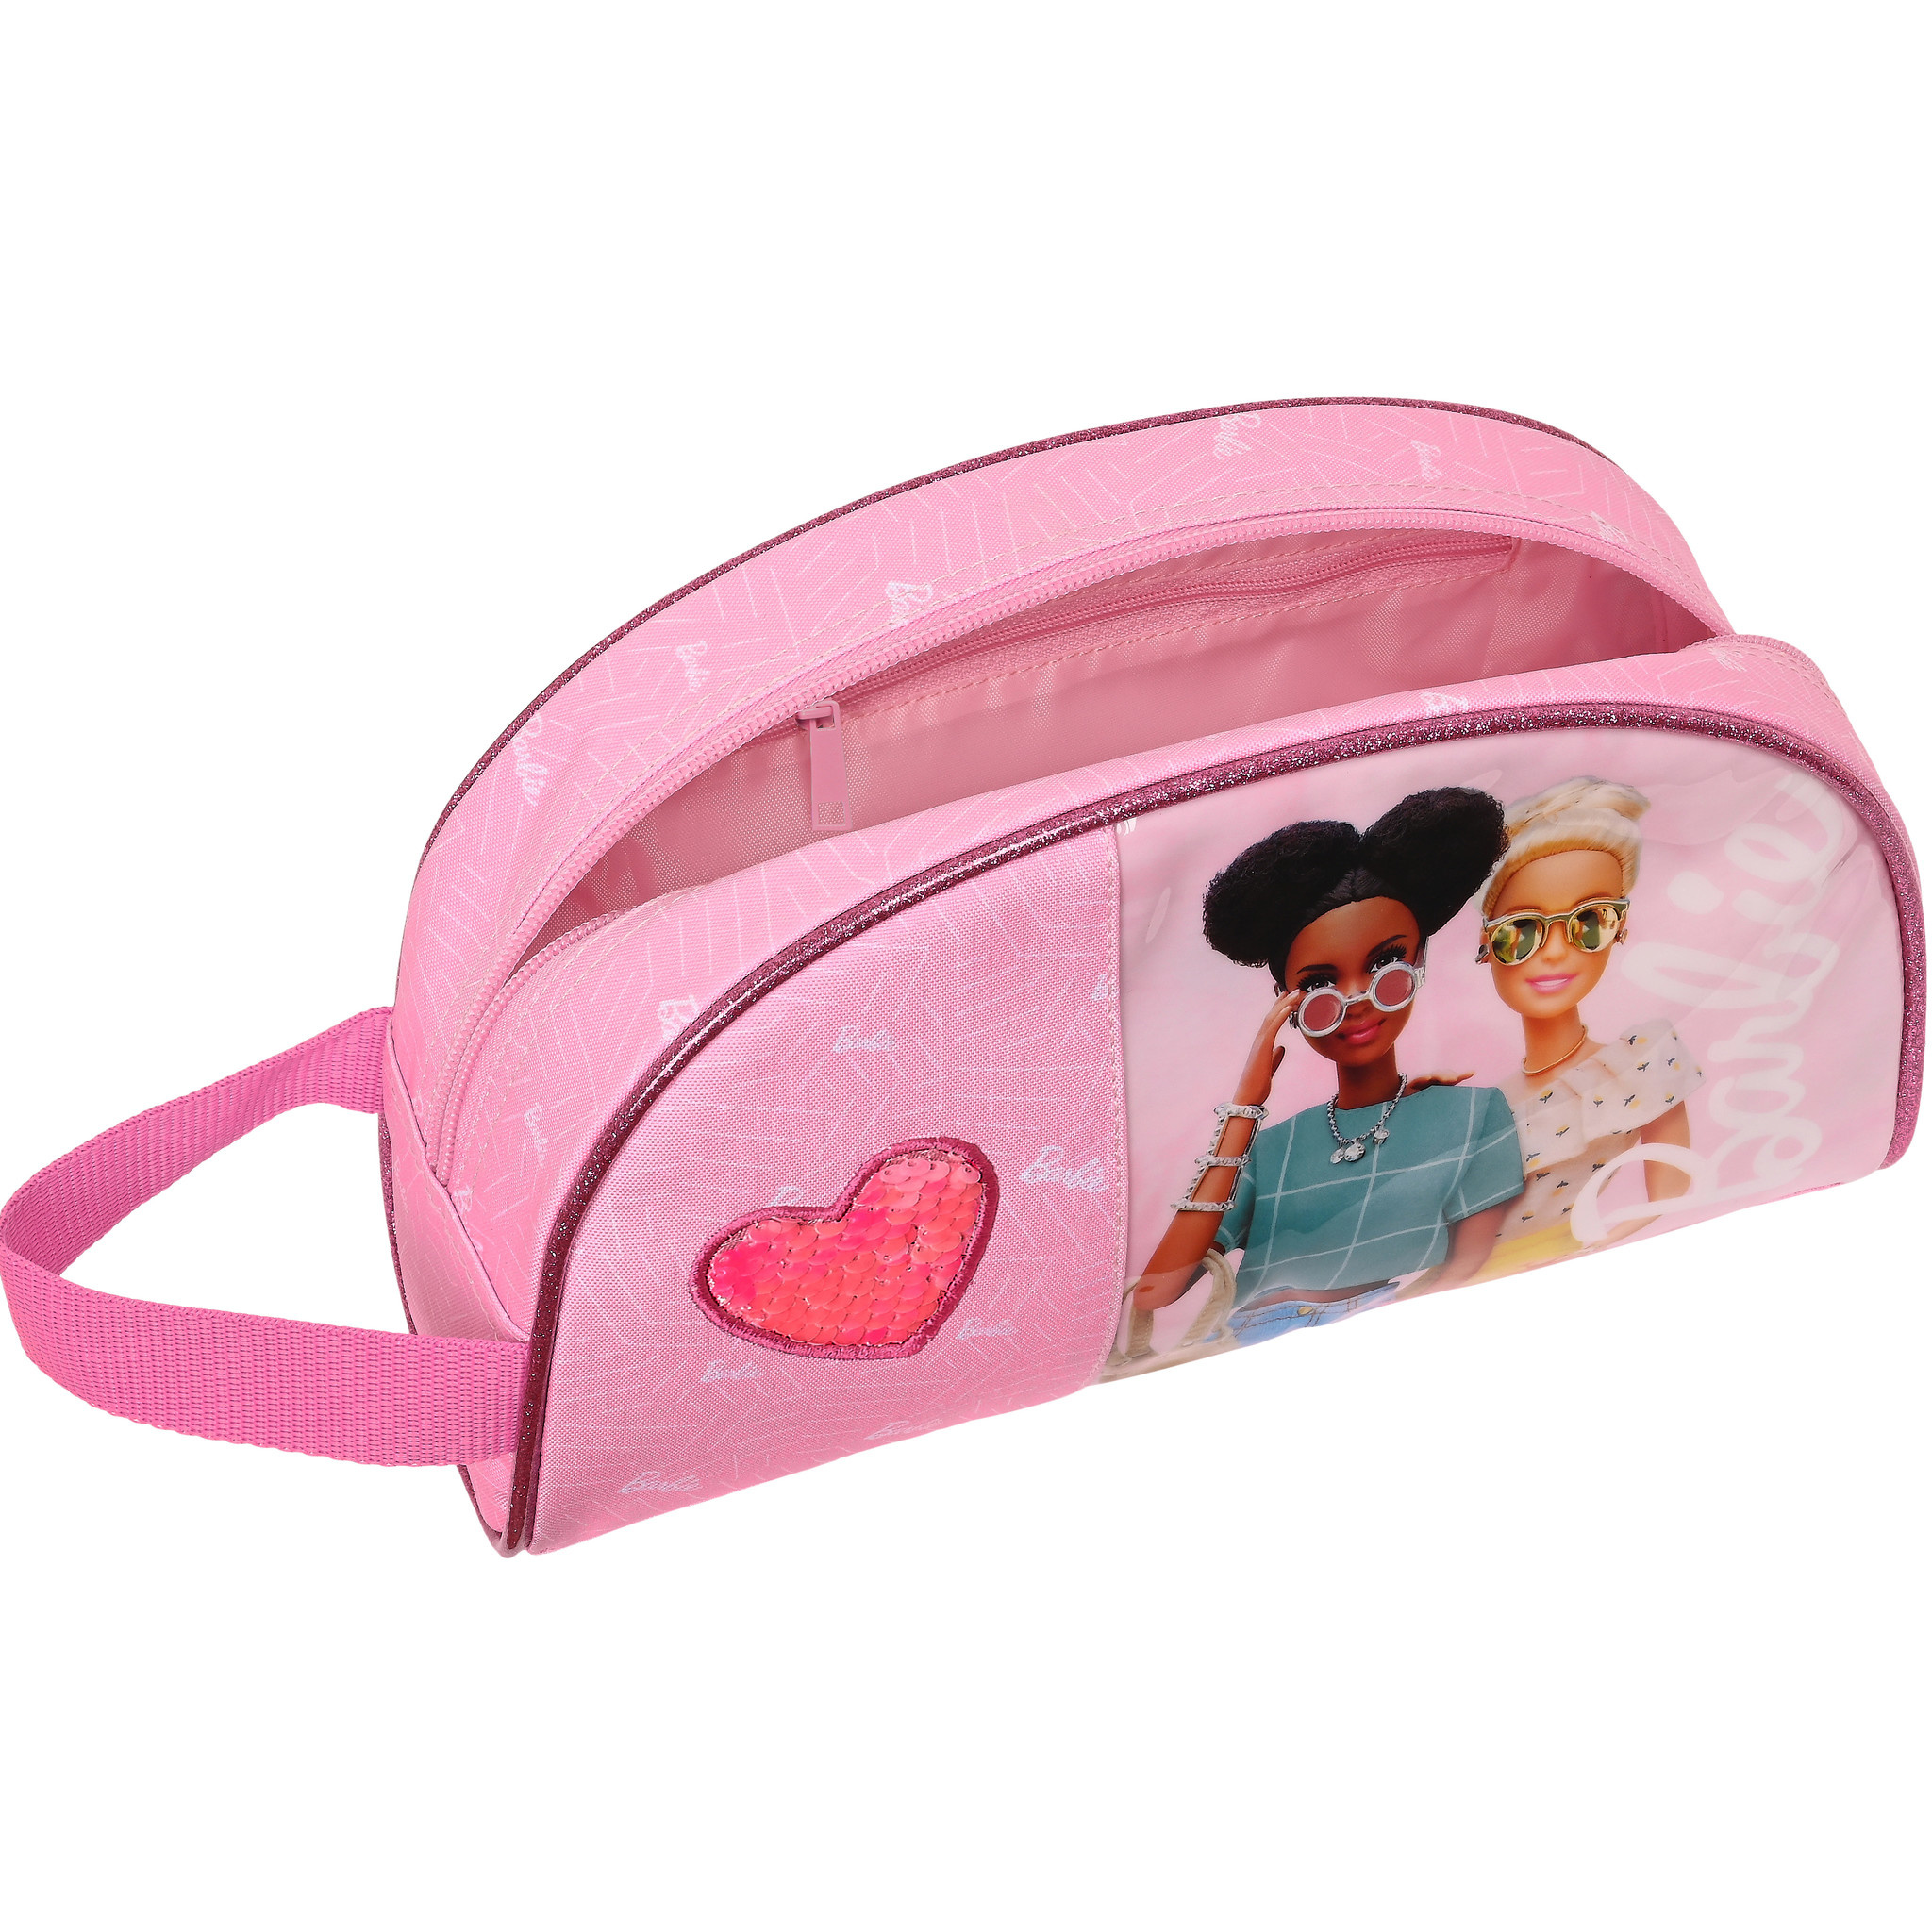 Barbie Toiletry bag, Girl - 26 x 16 x 19 cm - Polyester